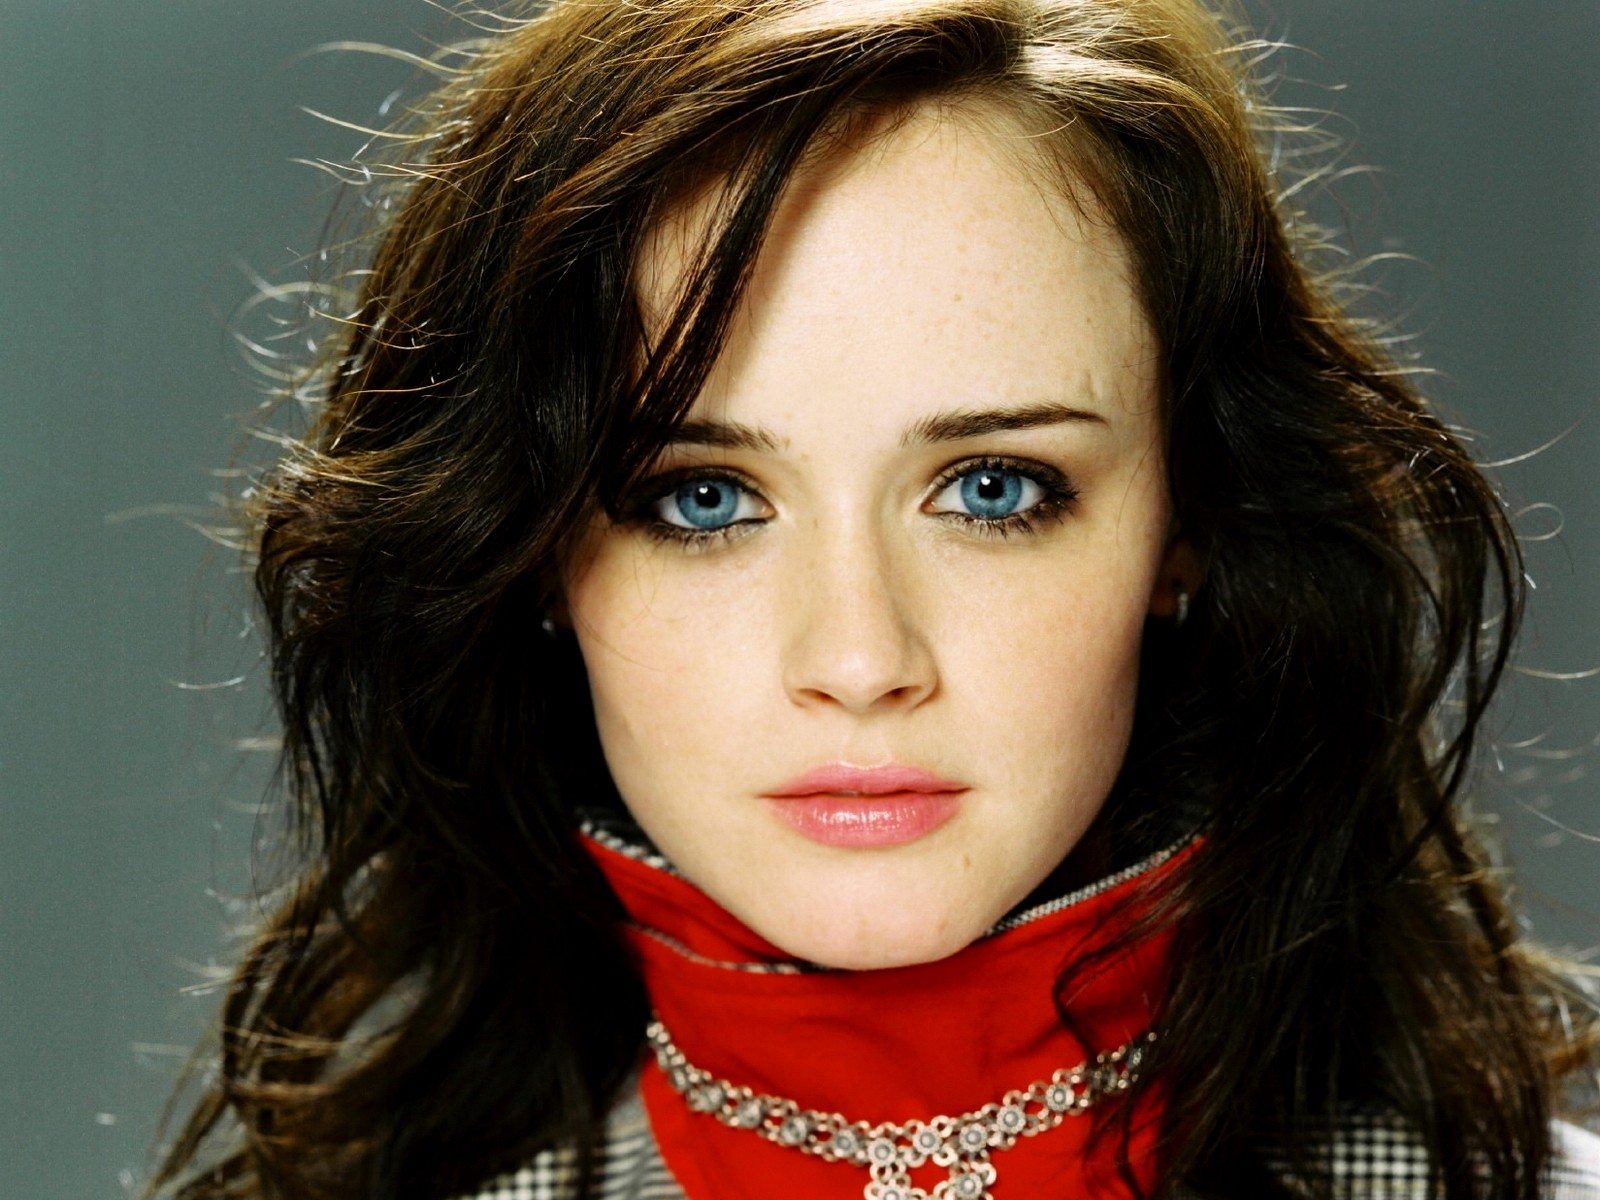 Dark-haired model with striking blue eyes - wide 6